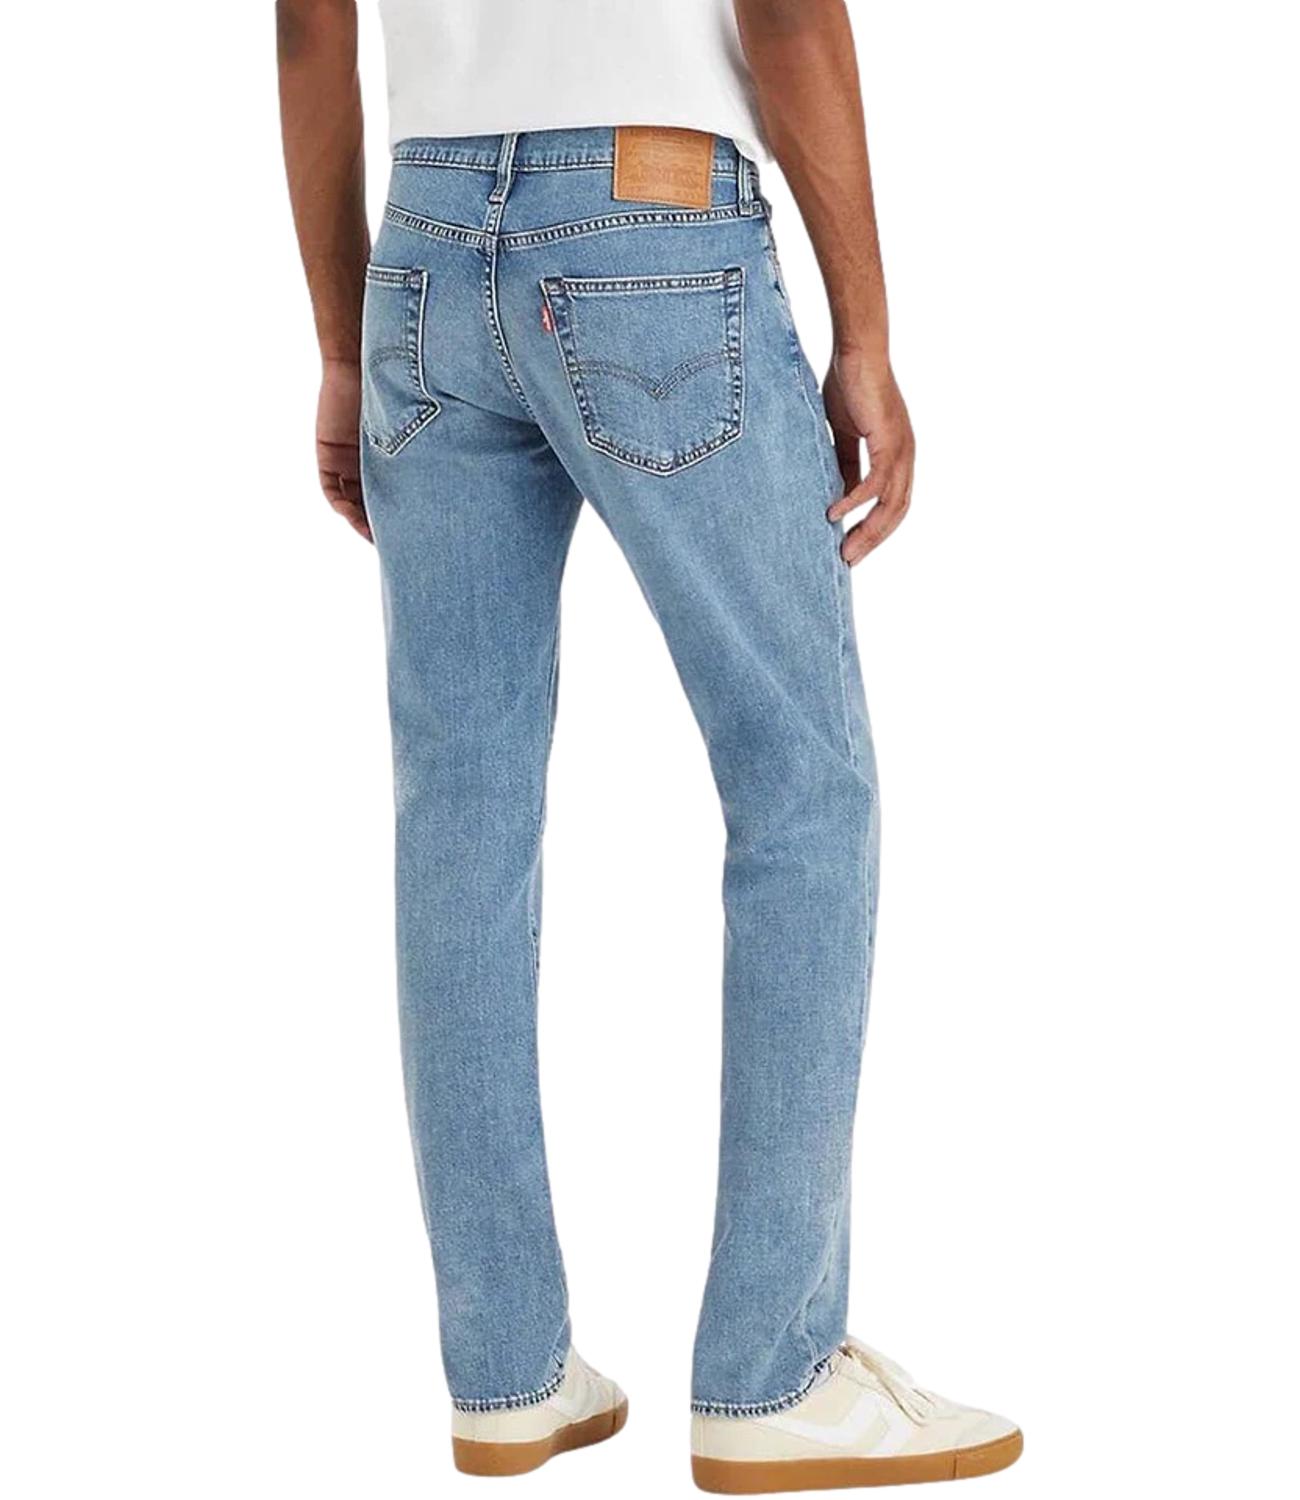 Levis 511 slim jeans uomo chiaro